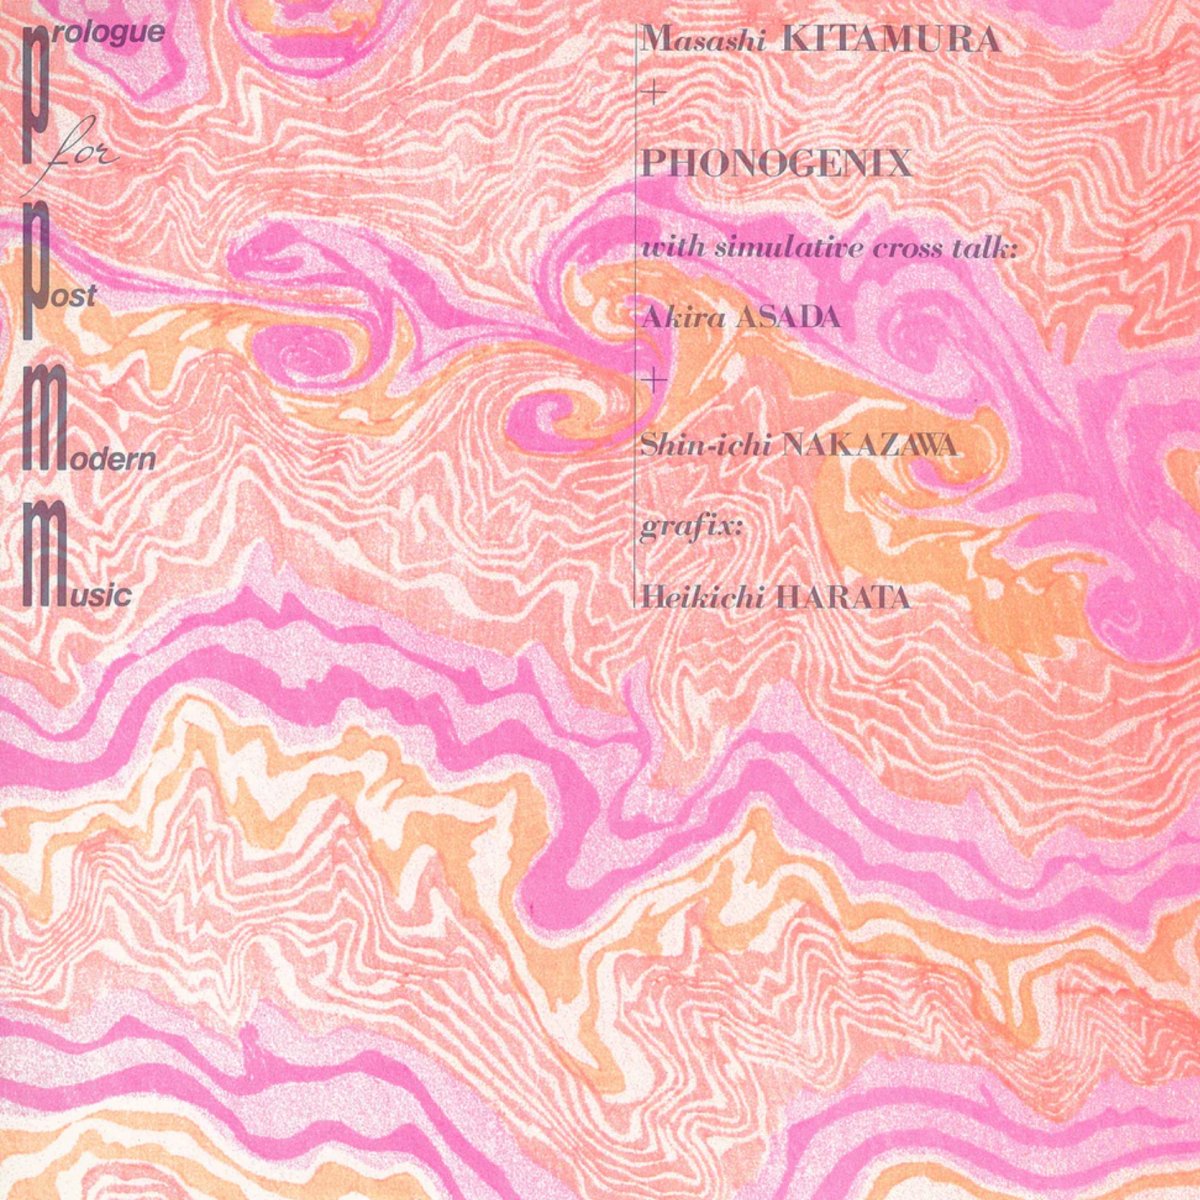 MASASHI KITAMURA + PHONOGENIX - Prologue for Post-Modern Music - Inner Ocean Records